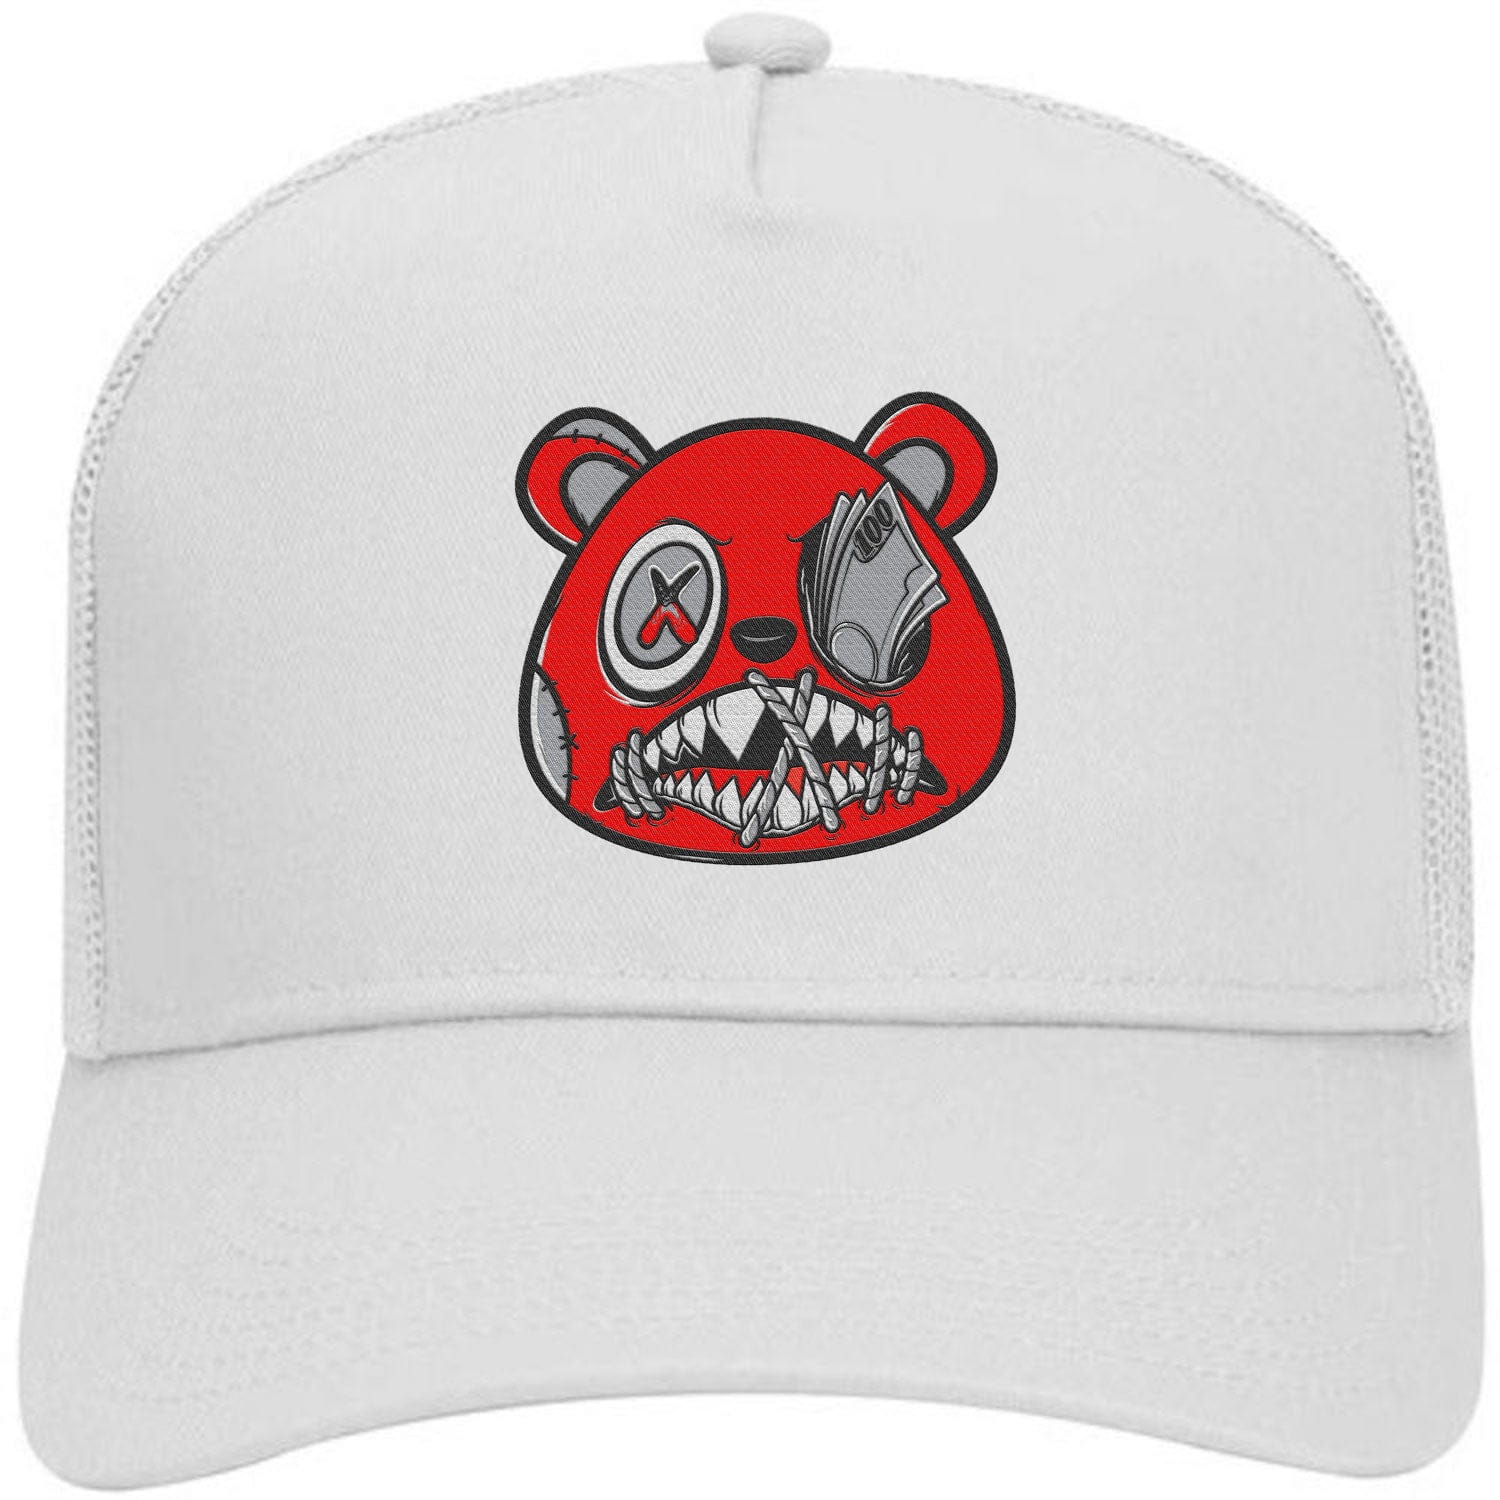 Cherry 12s Trucker Hats - Jordan 12 Cherry Hats - Money Talks